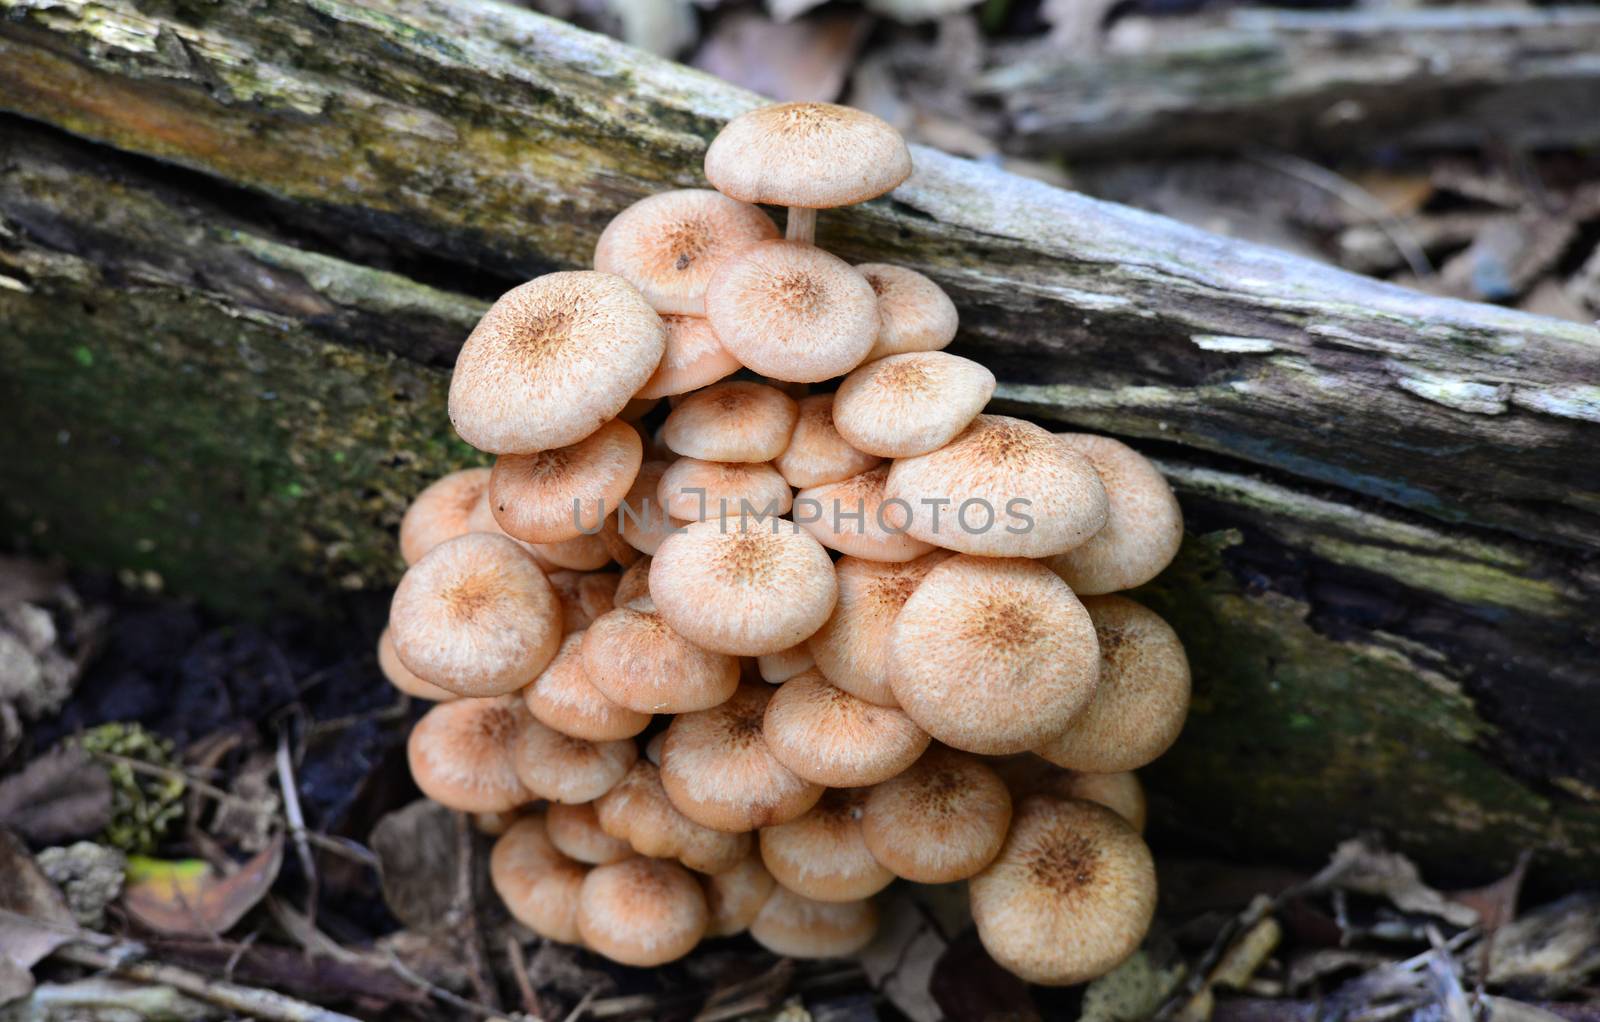 Brown poisonous bracket mushroom fungi growing on a tree Bark